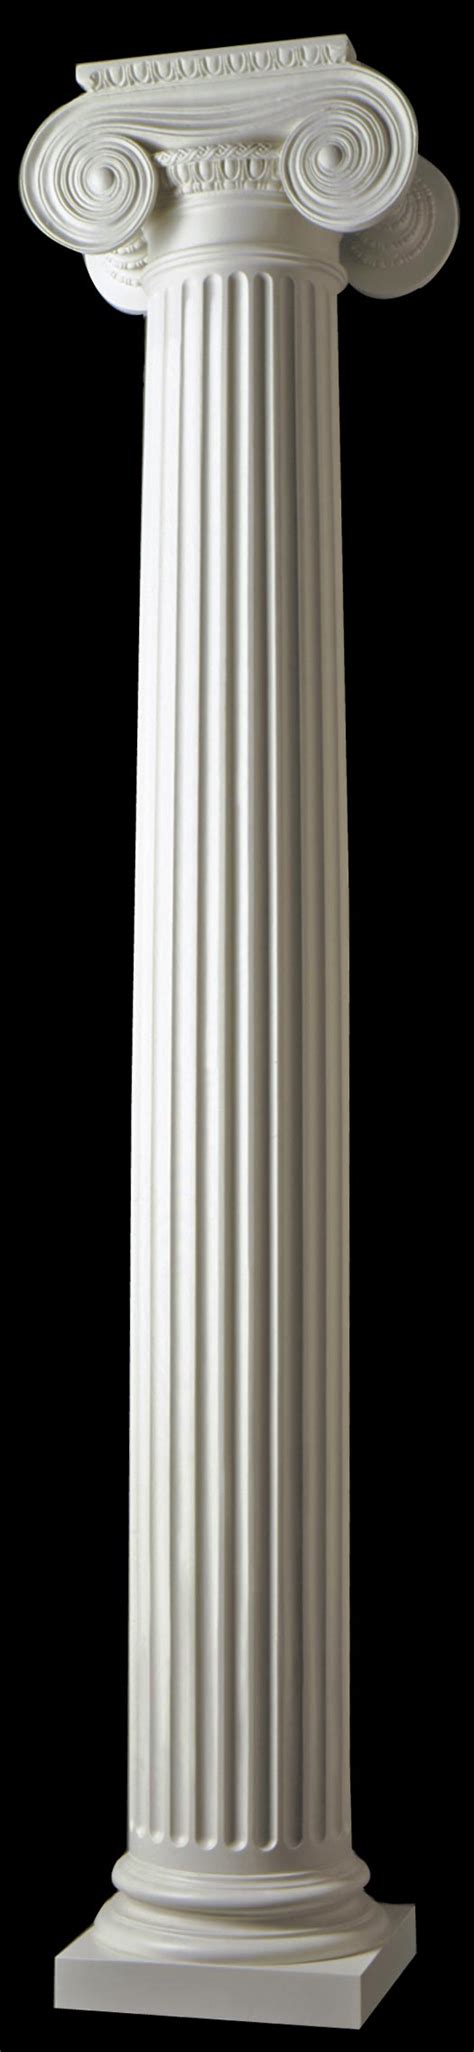 Greek Wood Columns With Necking Chadsworths 1 800 Columns